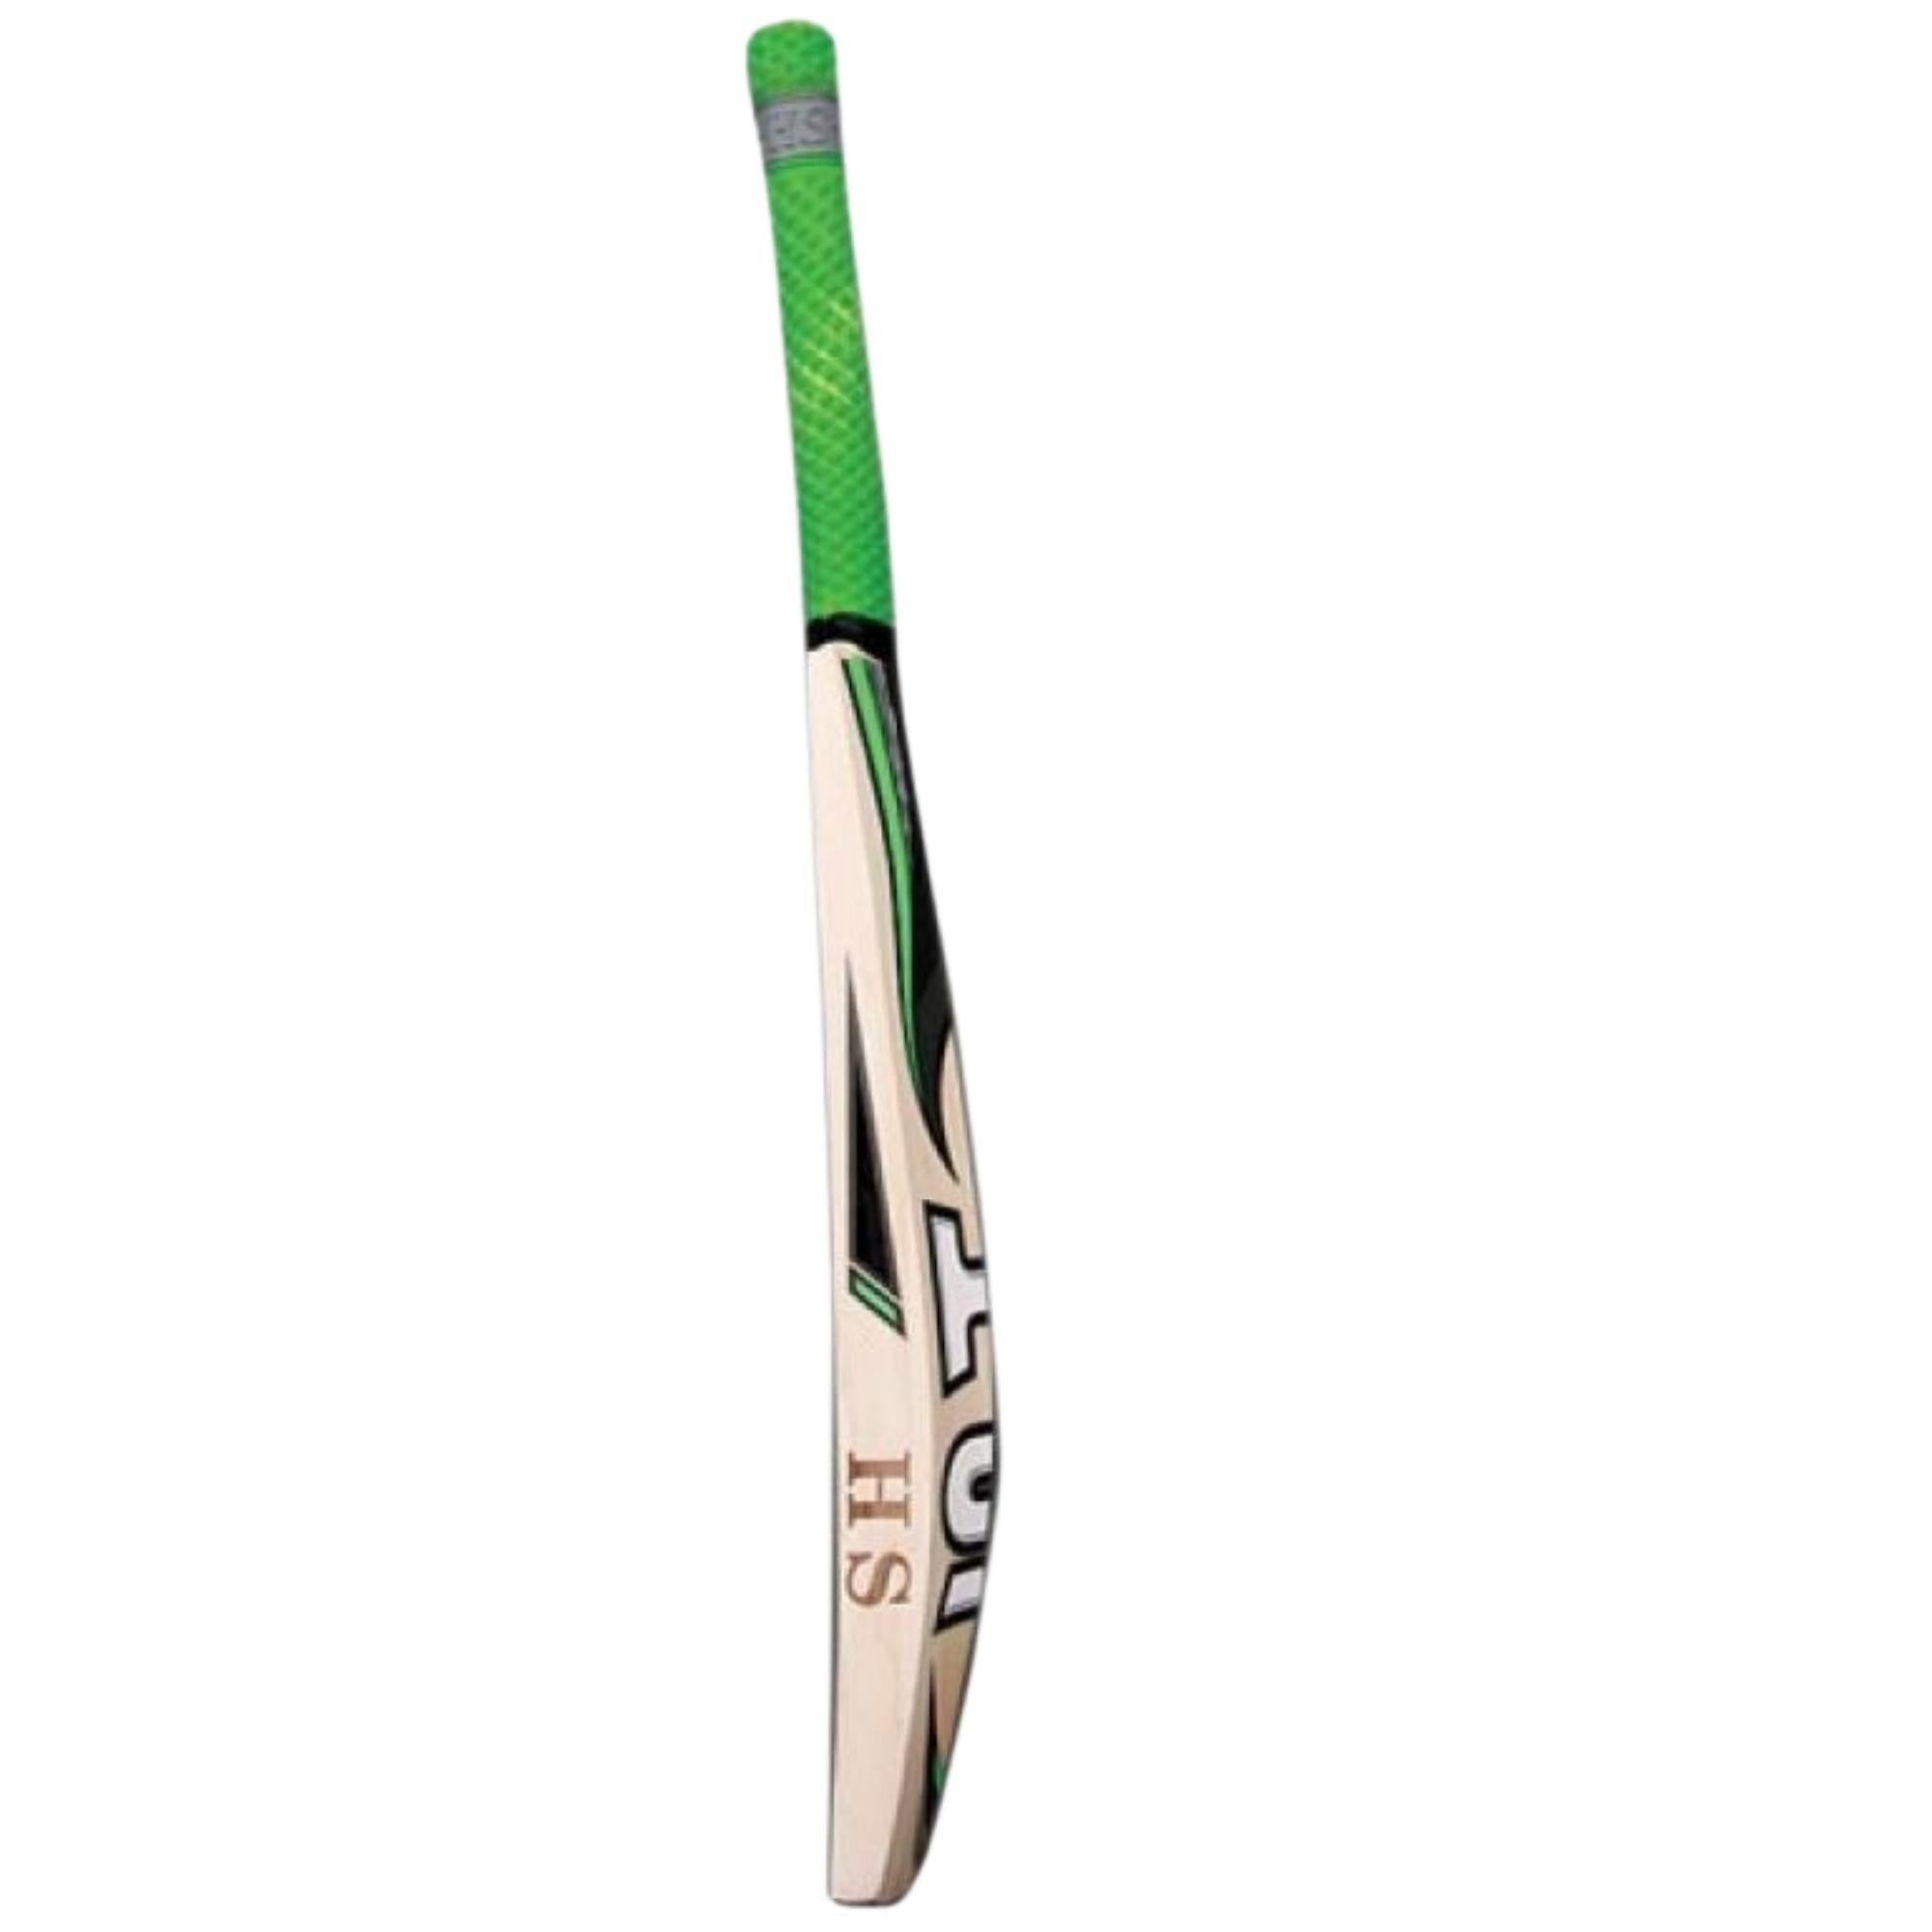 HS Core 7 English Willow Cricket Bat